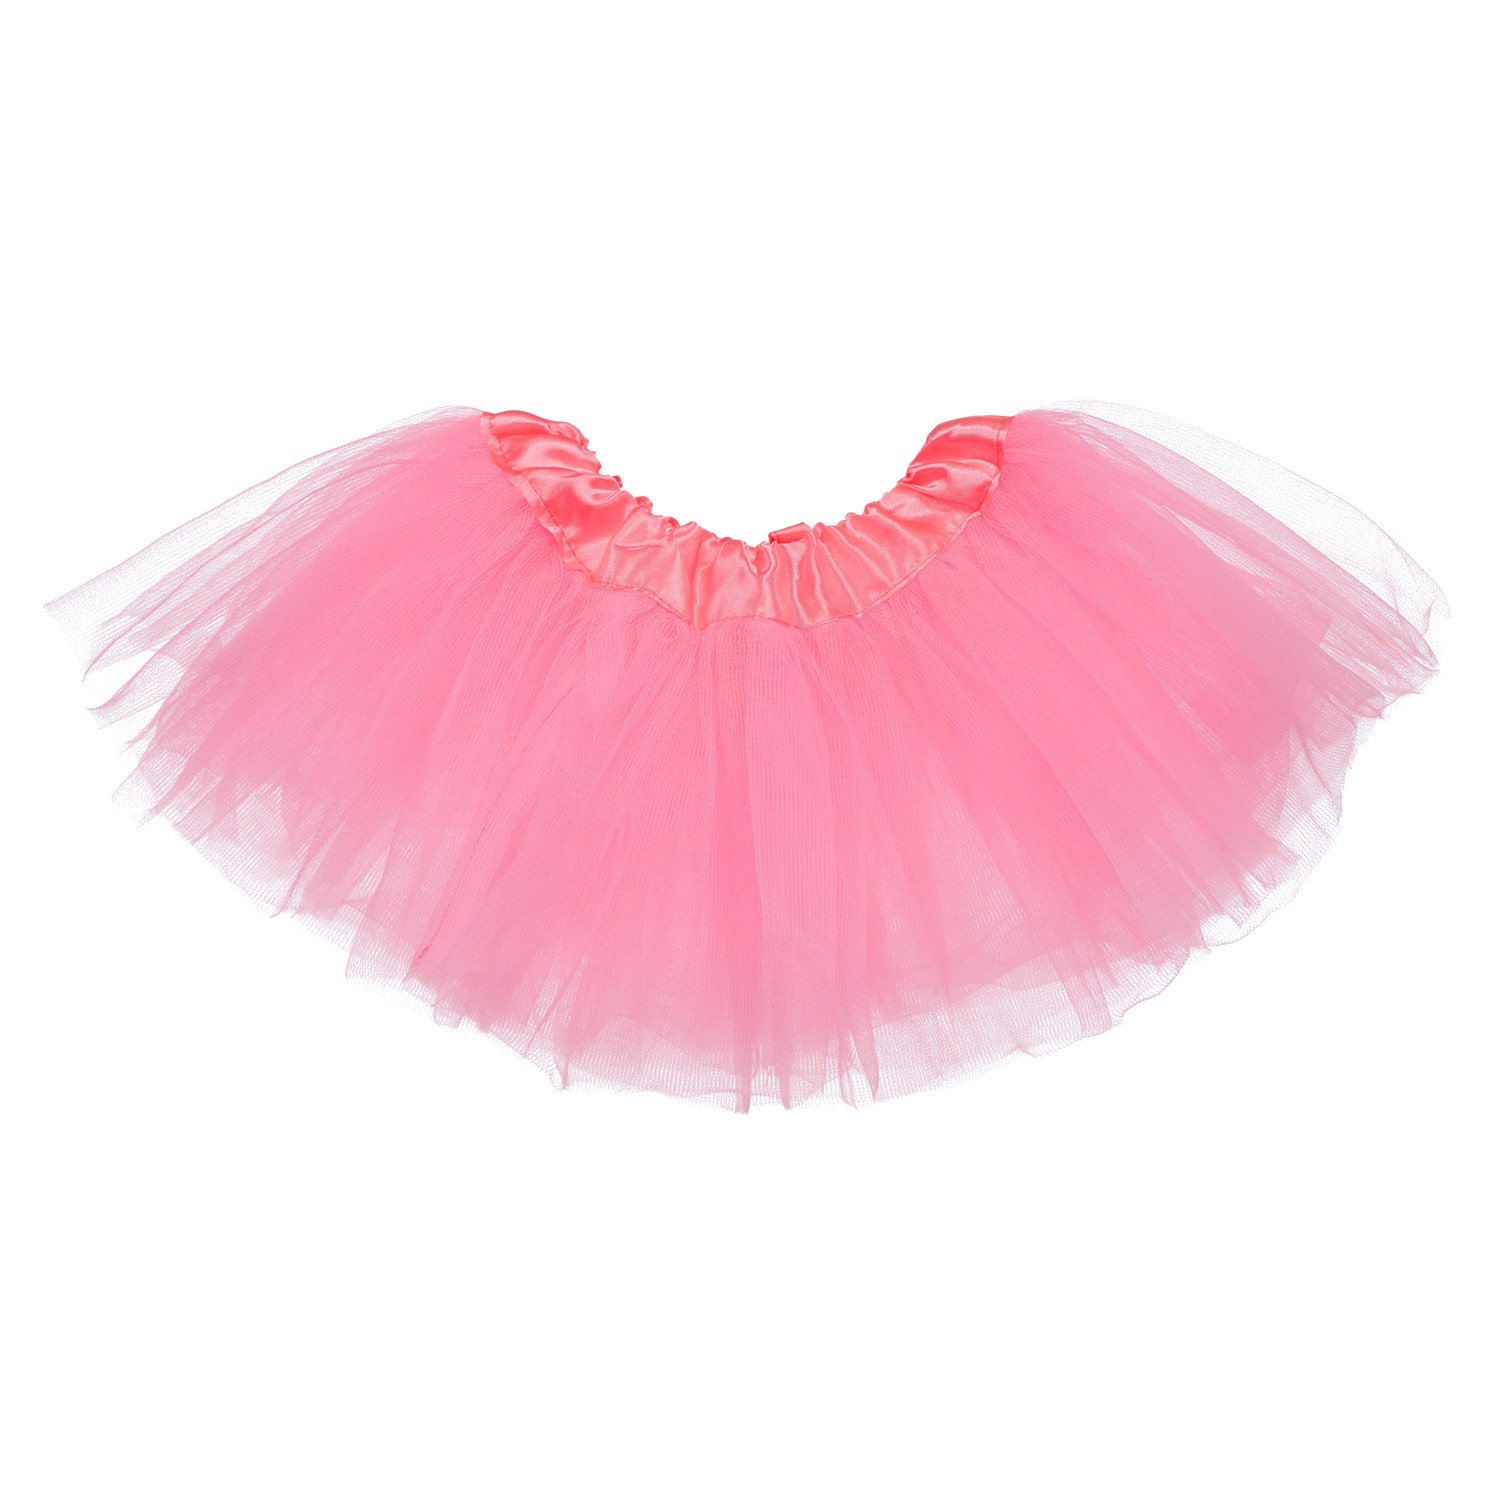 Ballerina Baby Tutu (5-layer) - Bubblegum Pink - image 1 of 2